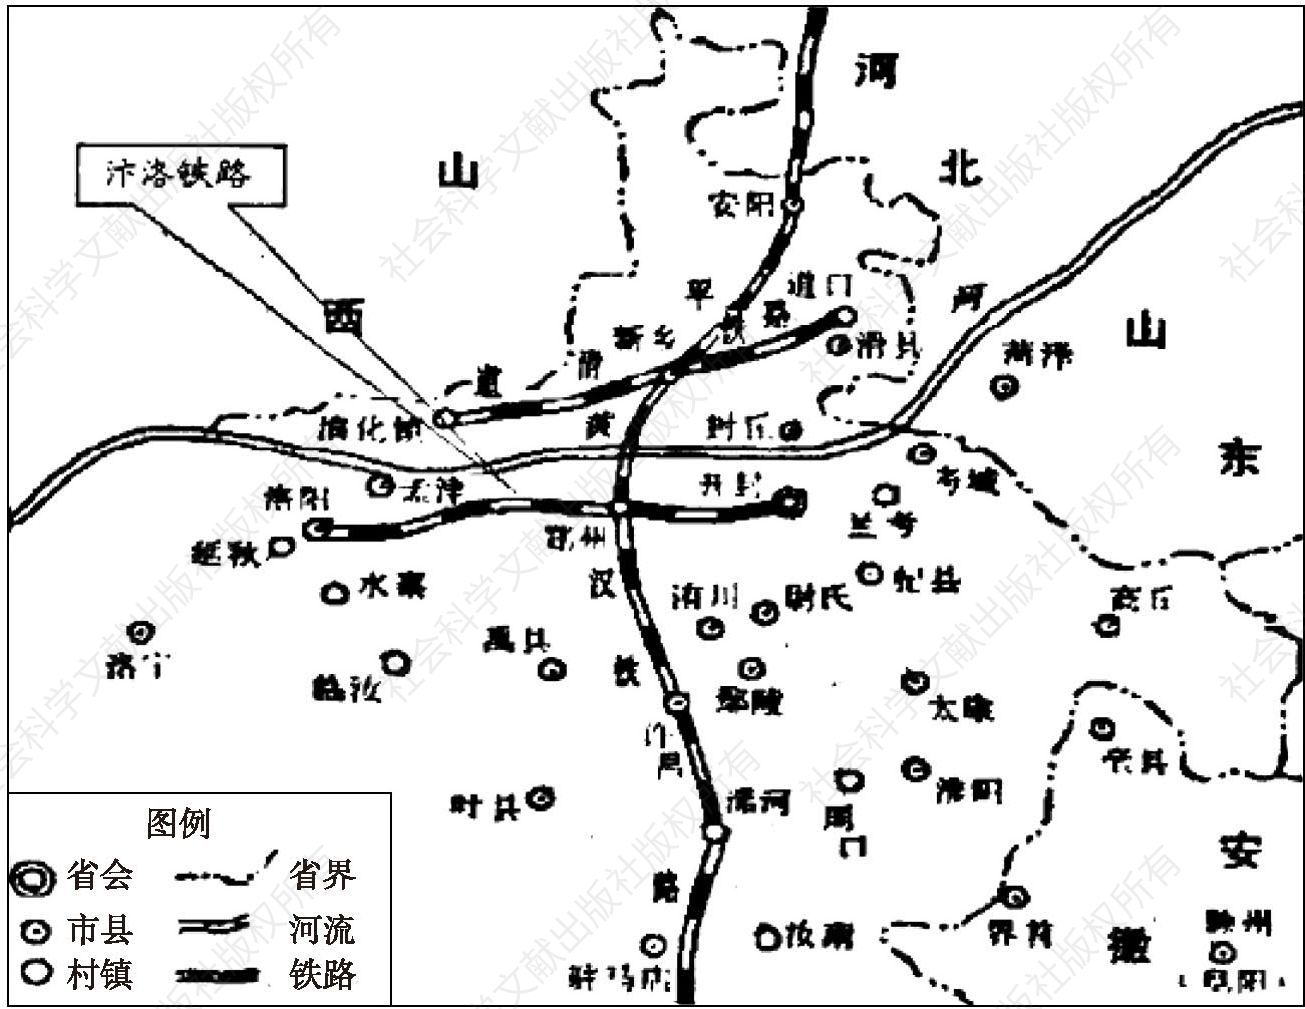 图2 汴洛铁路